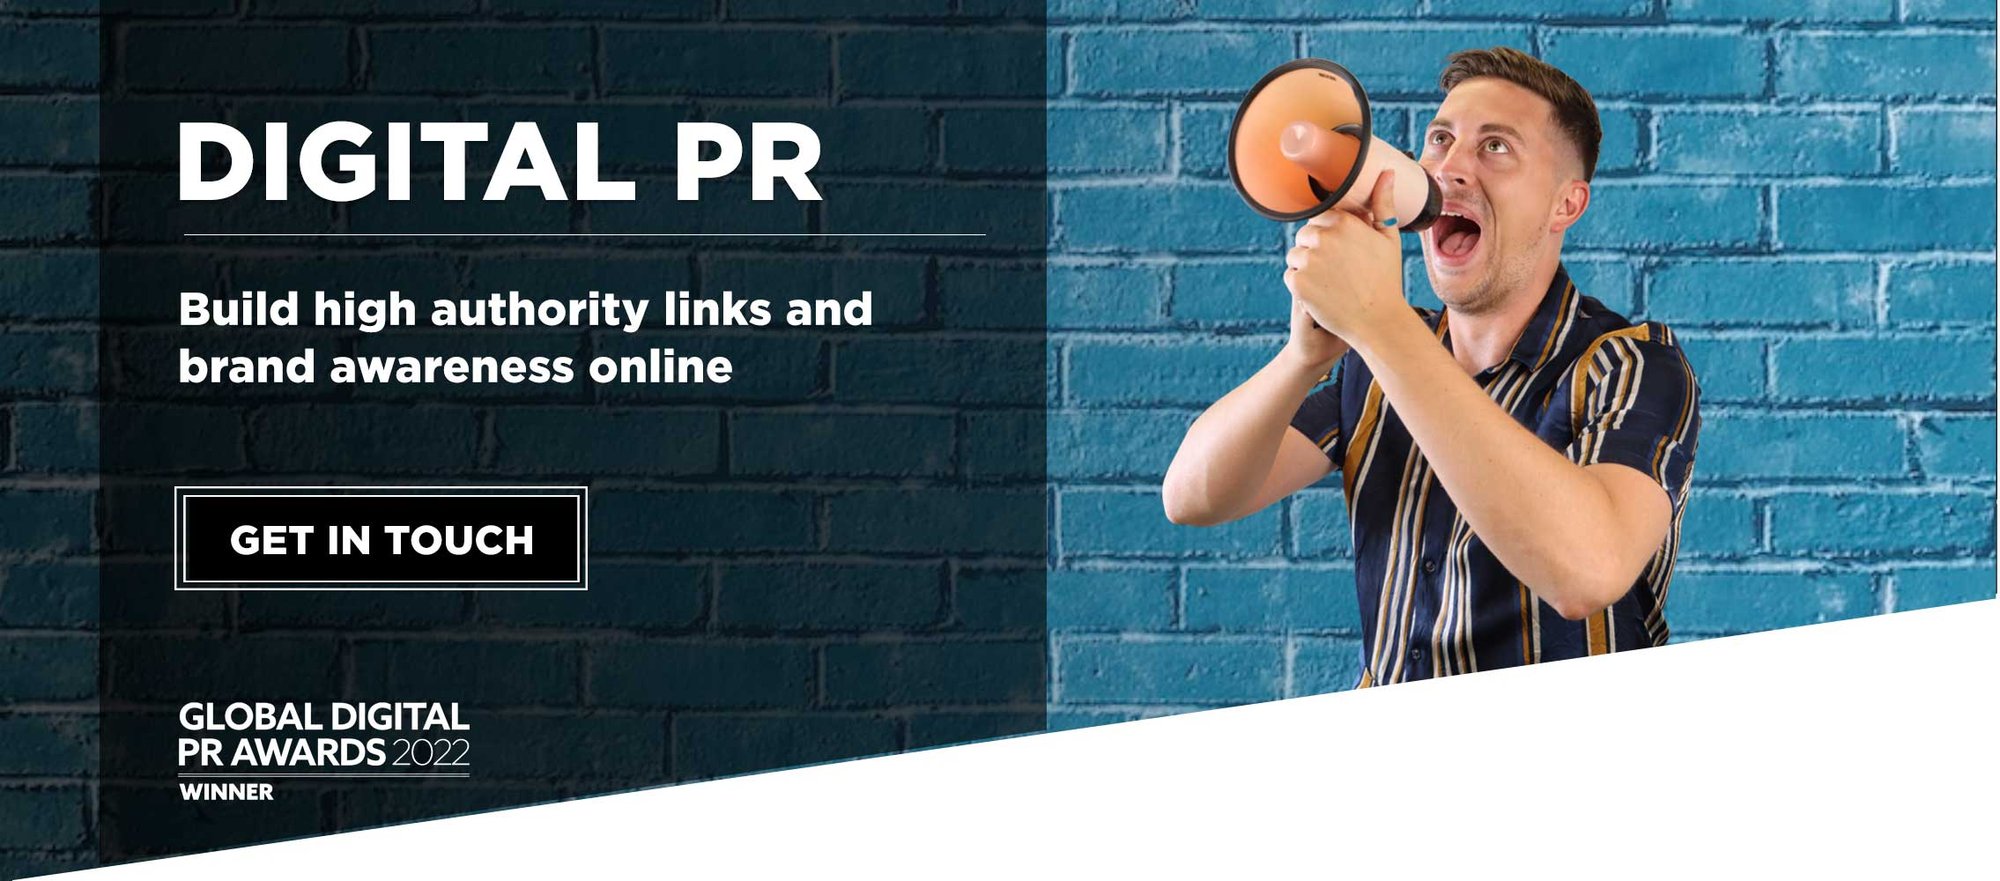 UK Digital PR Agency - Digital PR Services